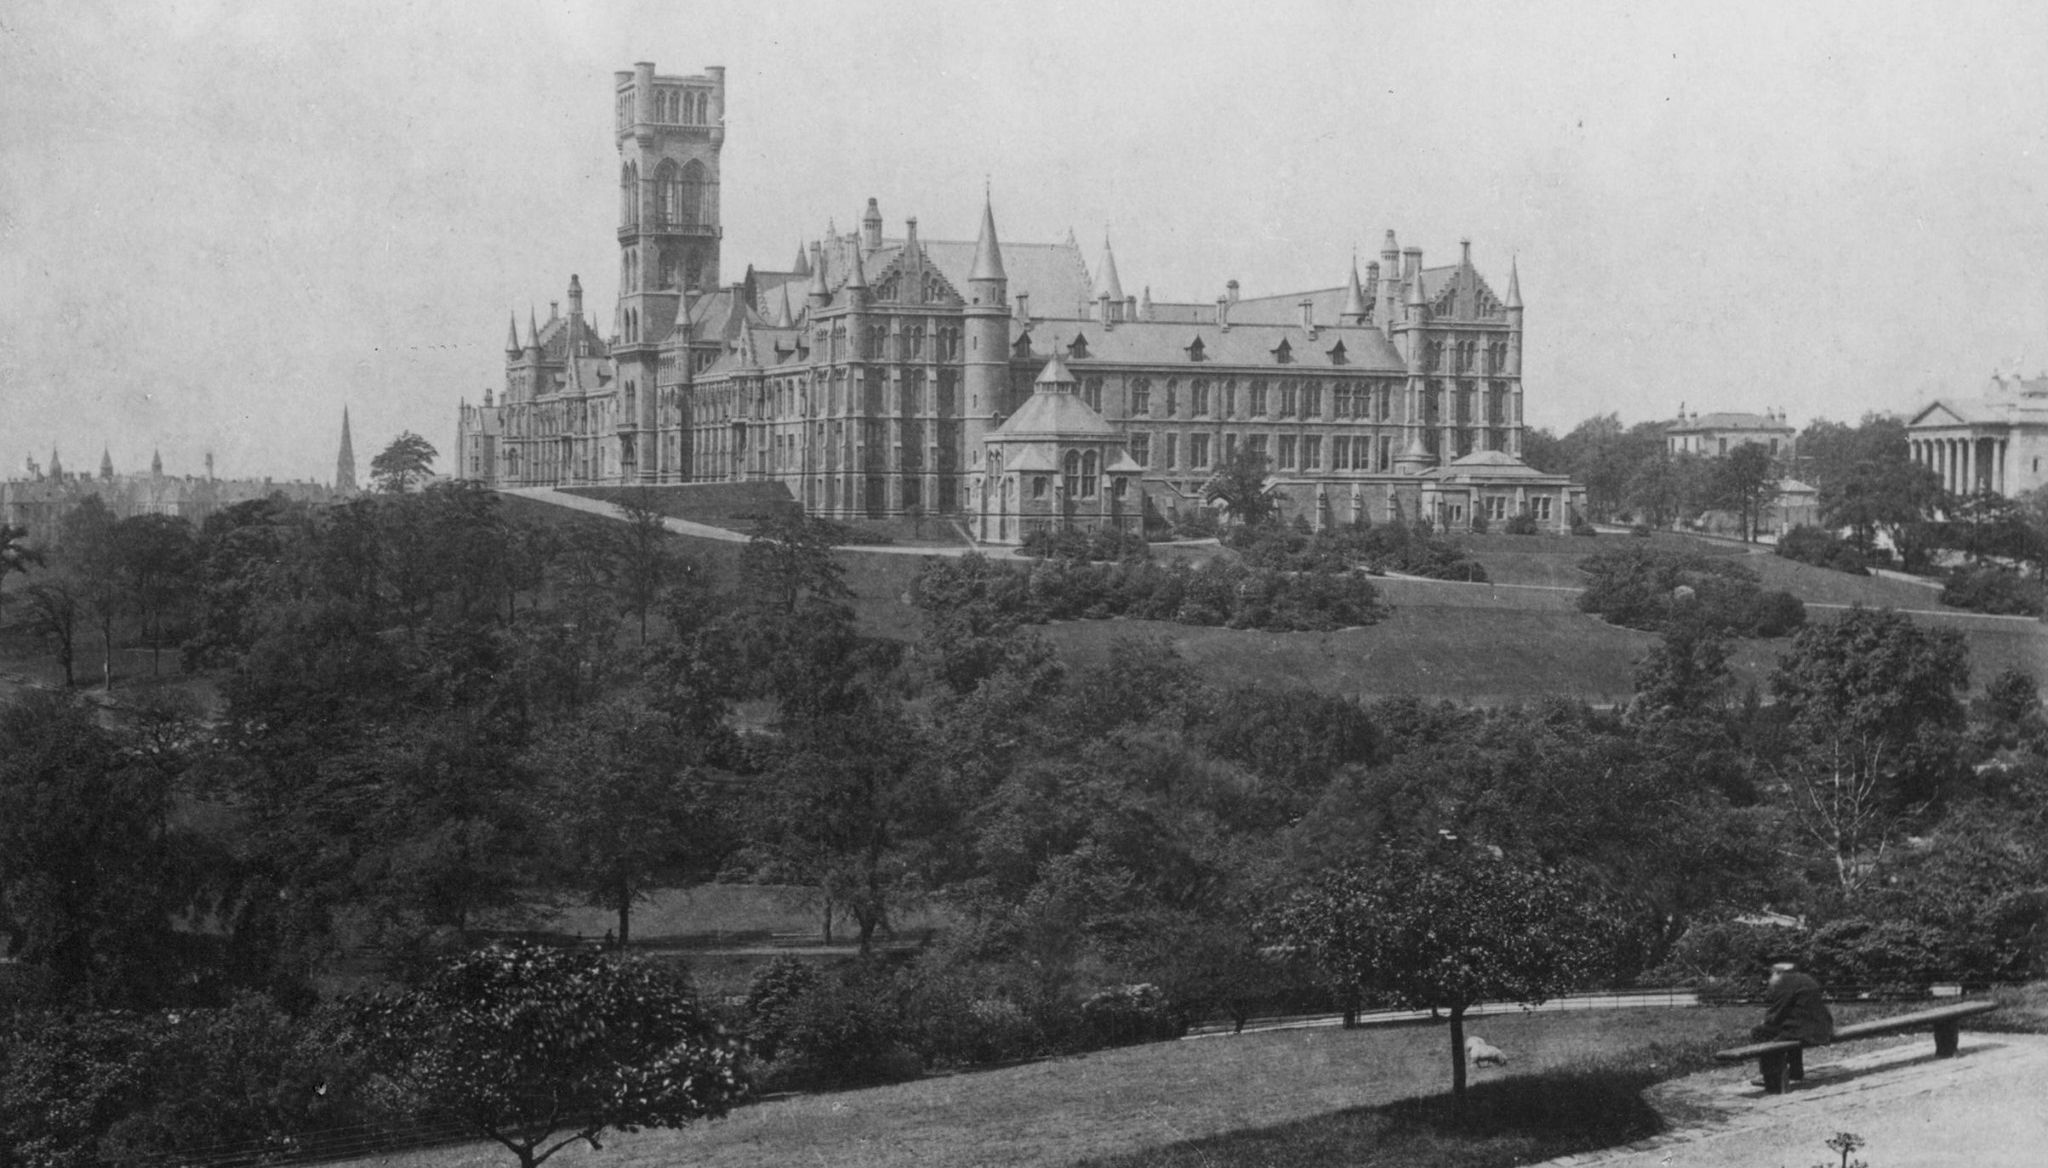 Glasgow University in 1870